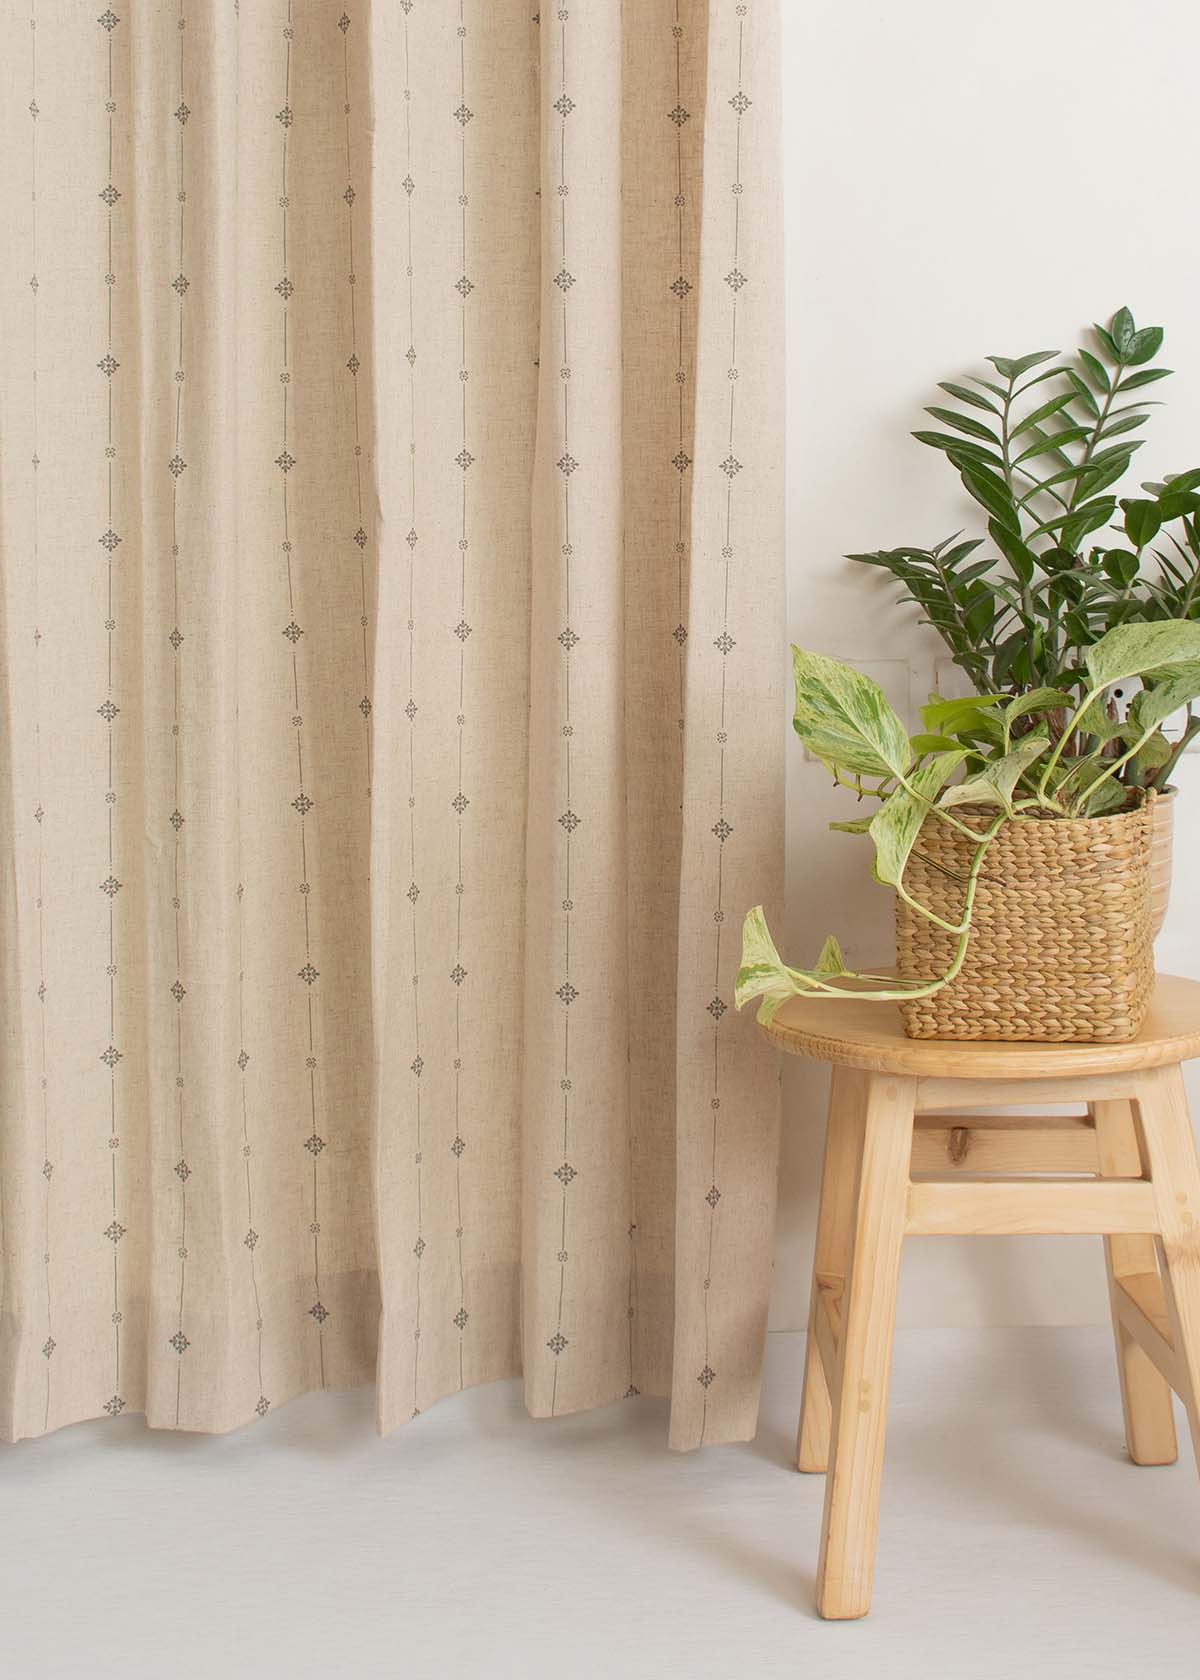 Tulsi linen Customizable Cotton ethnic curtain for Living room & bedroom - Room darkening  - Beige